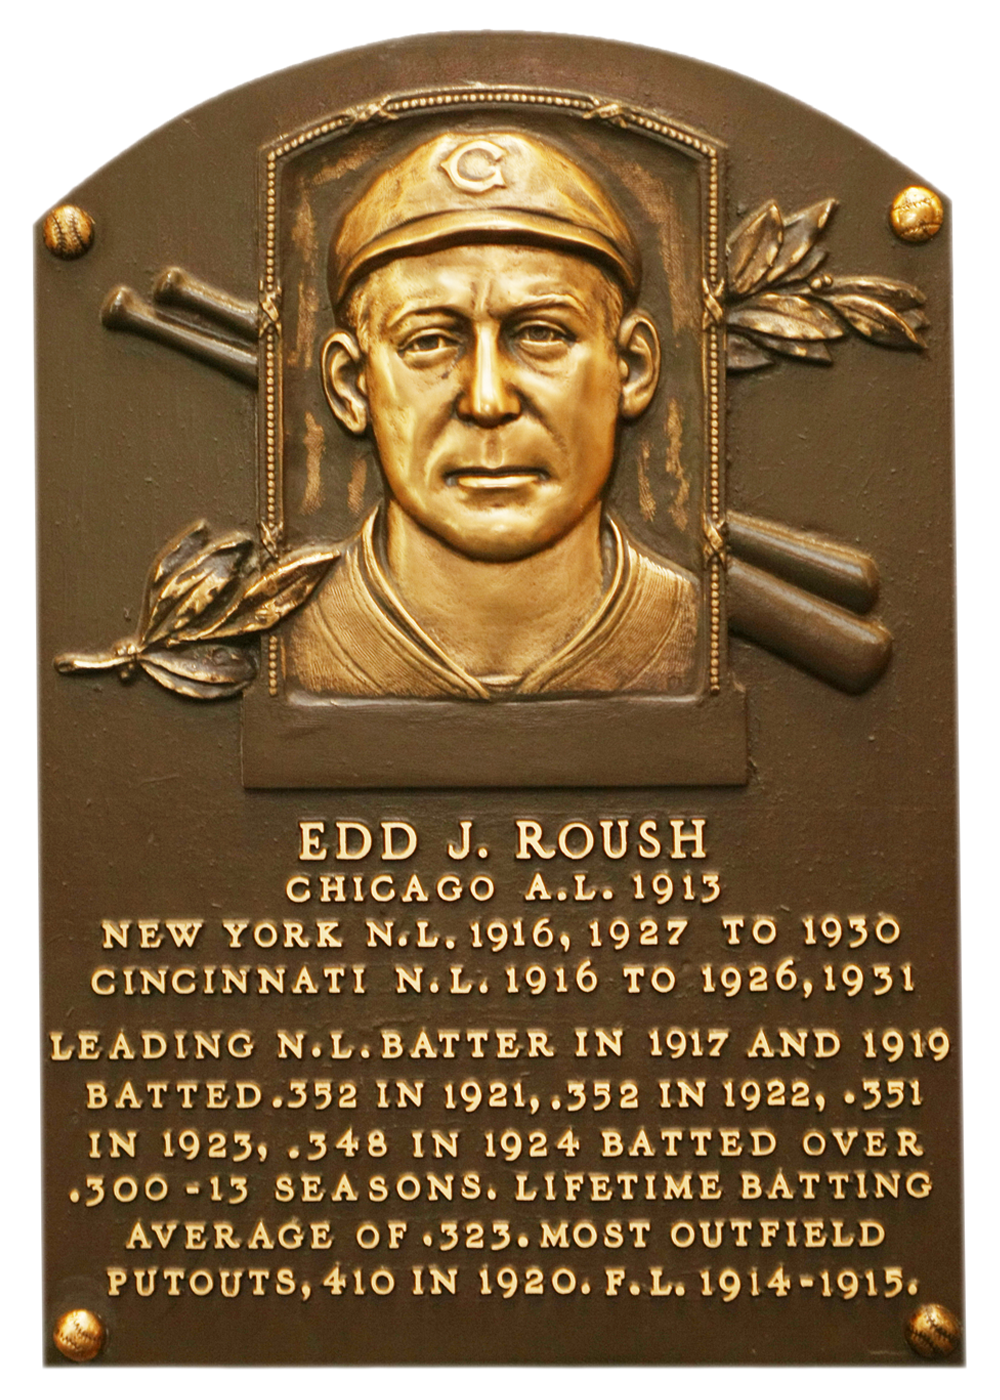 Edd Roush Hall of Fame plaque